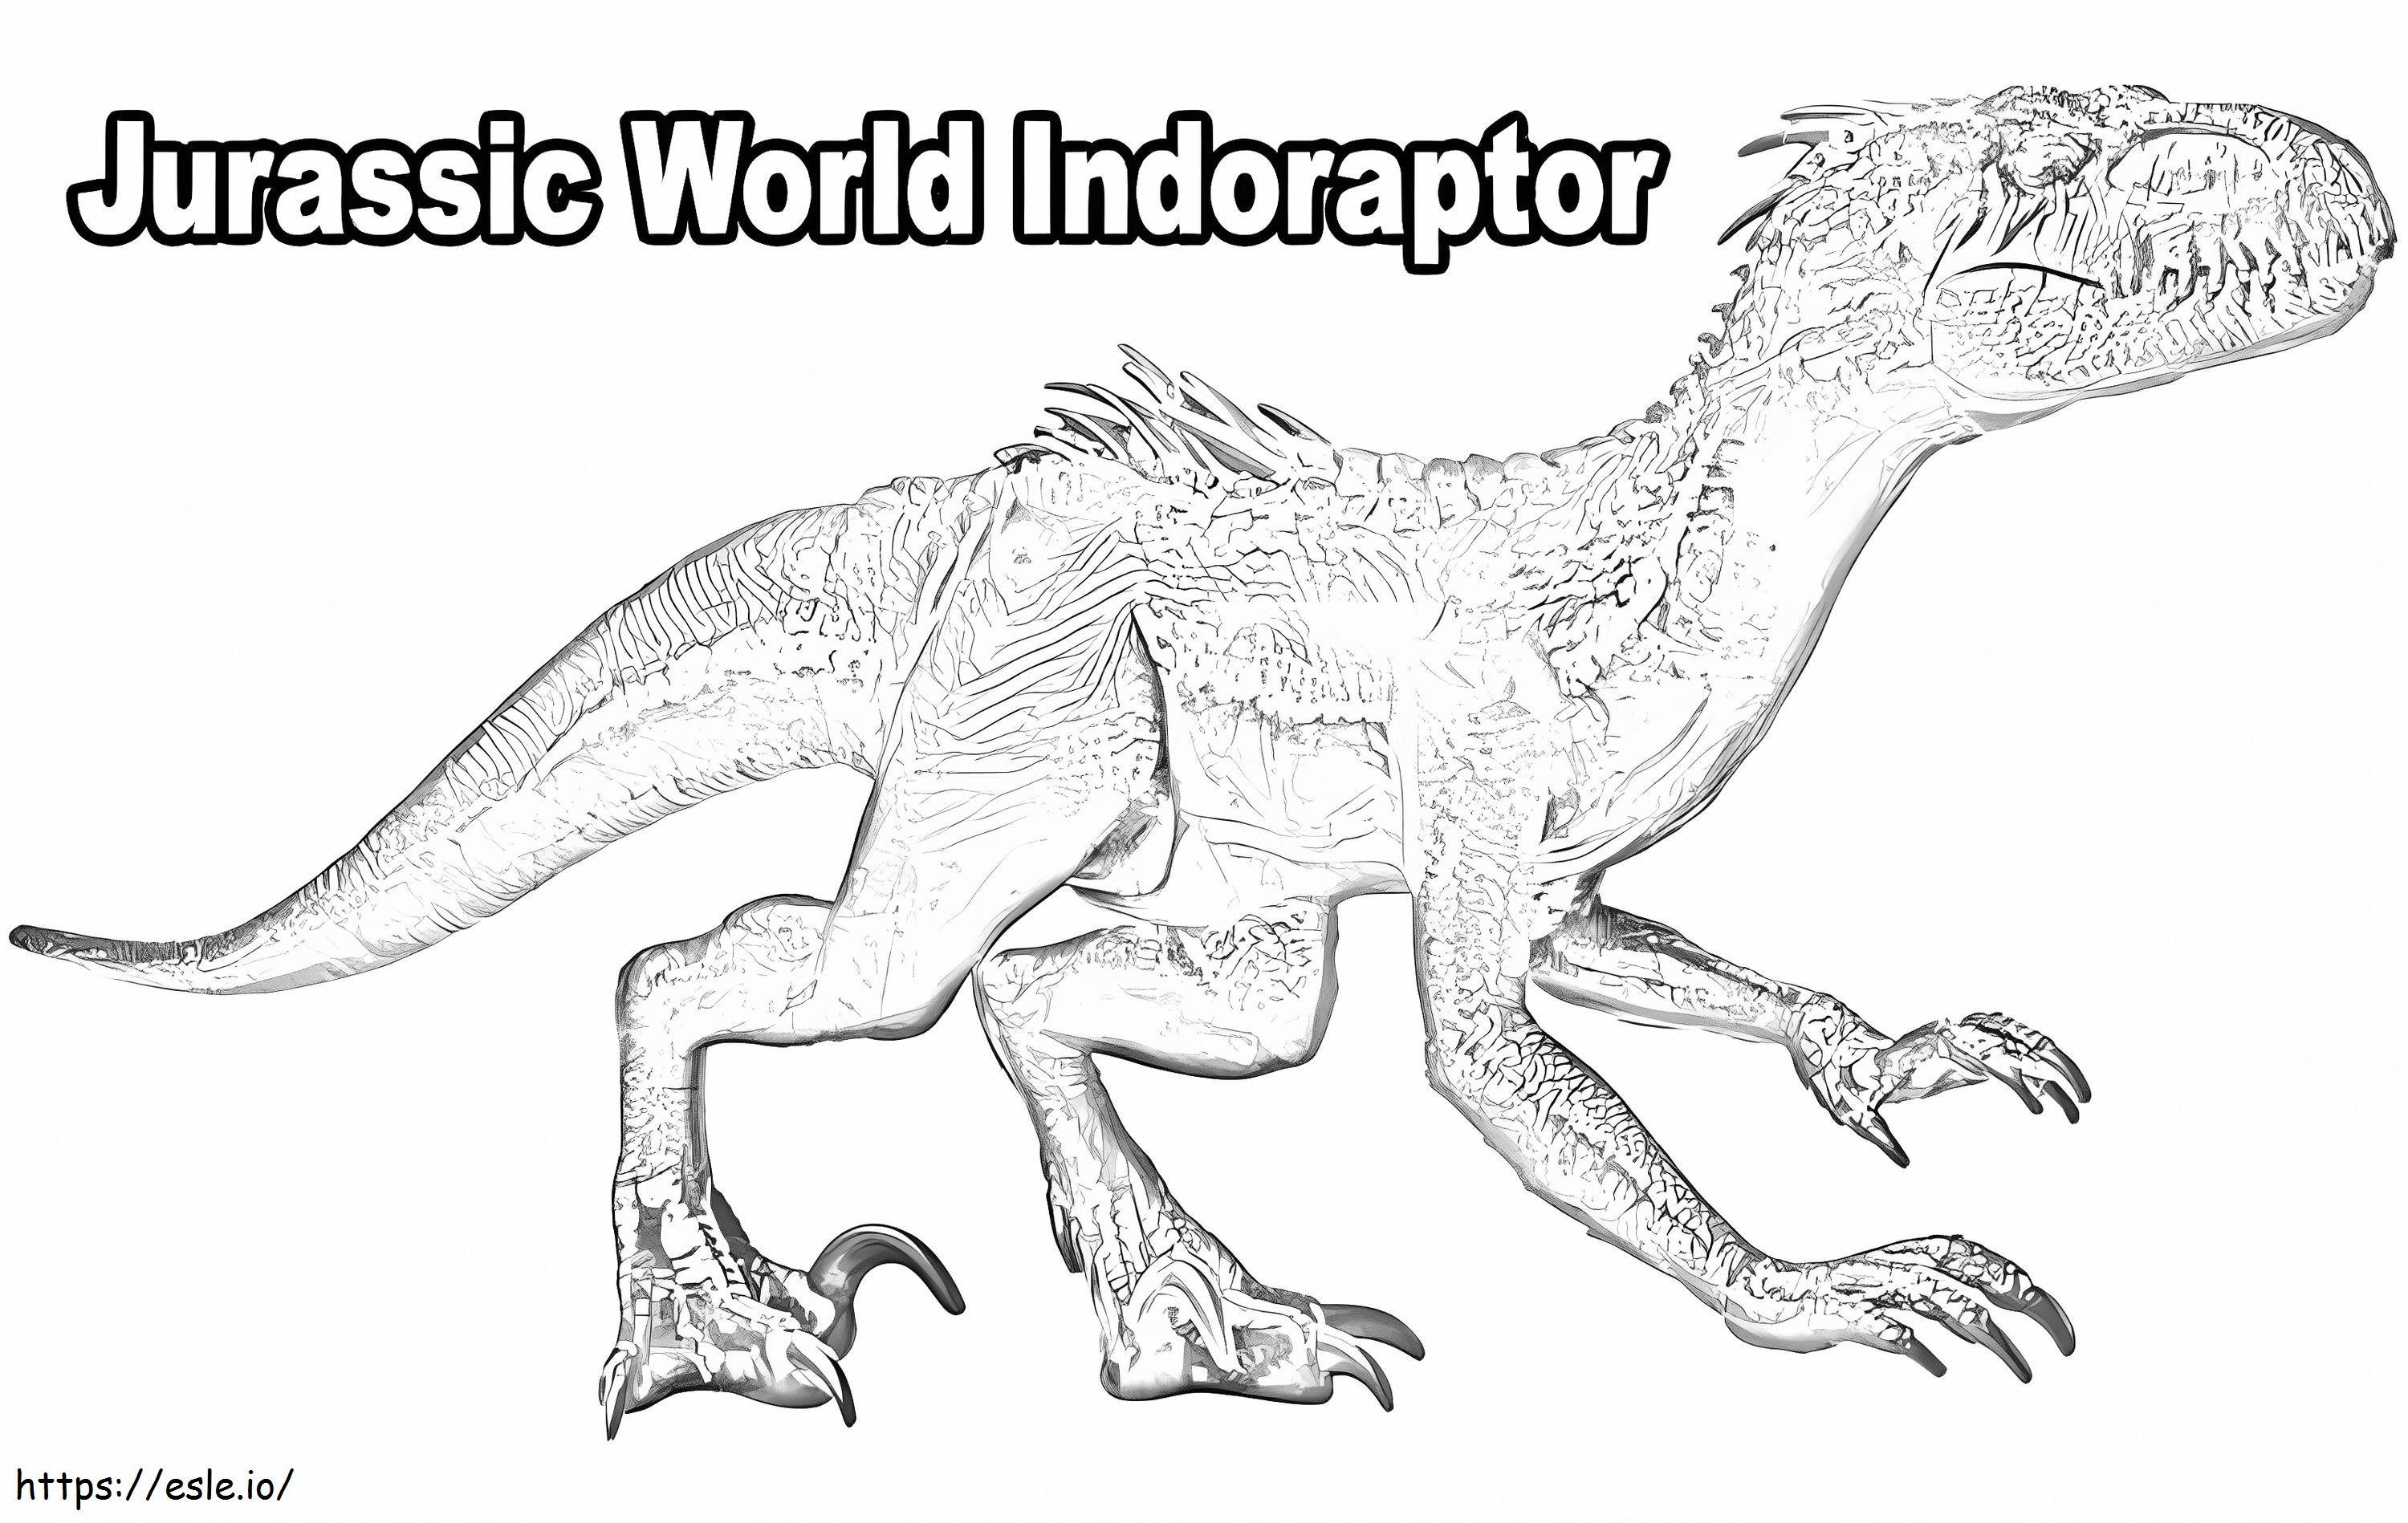 Jurassic World'de Indoraptor boyama